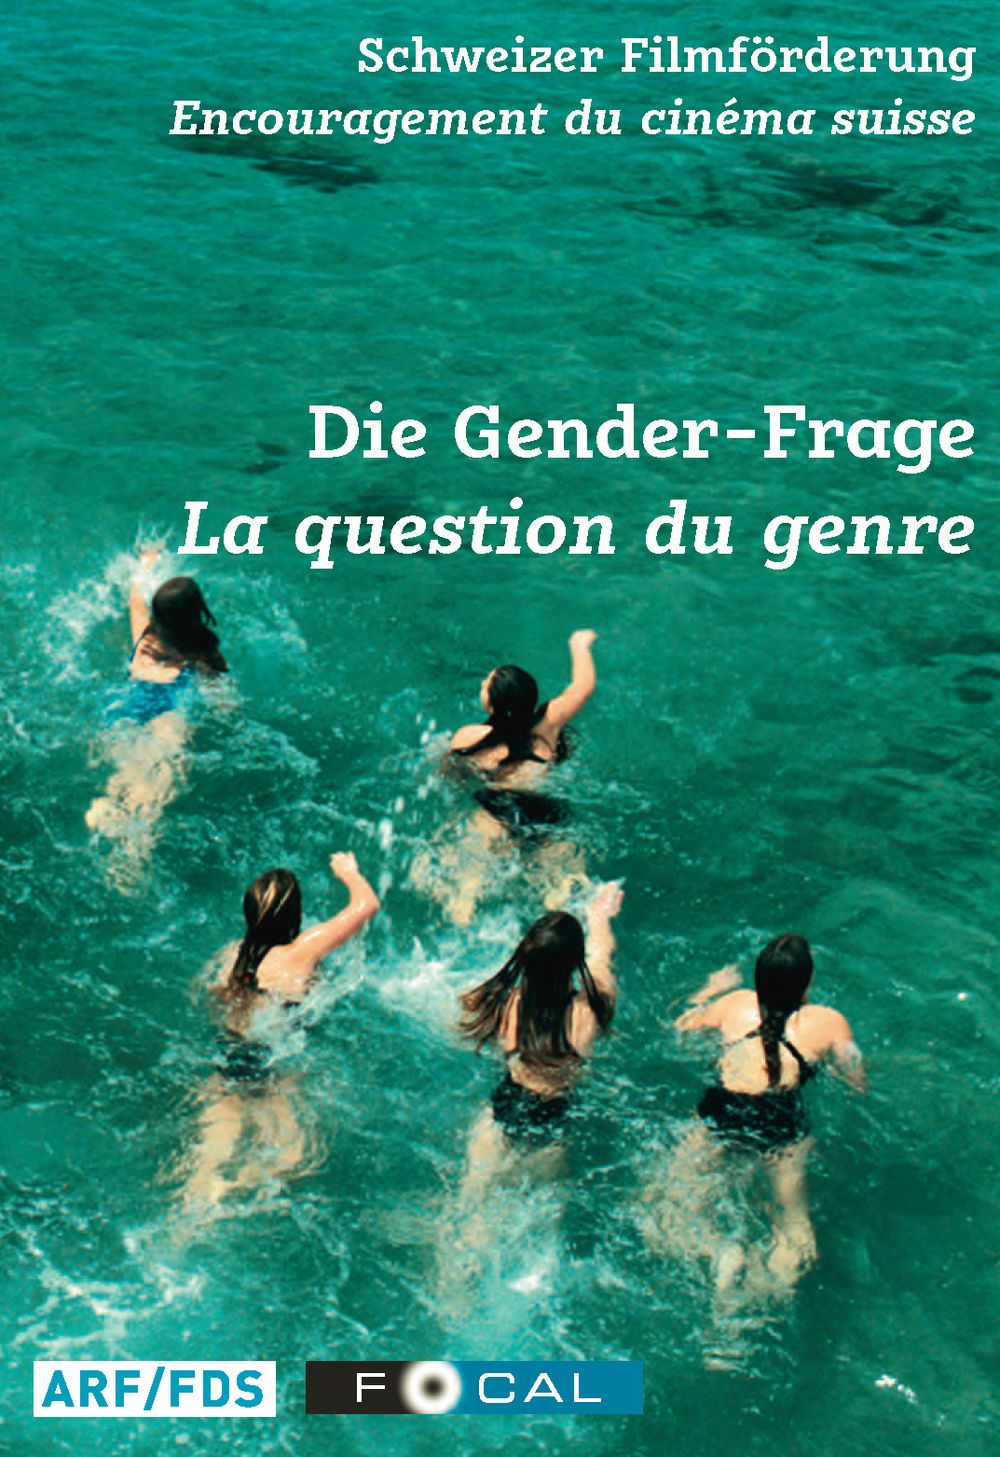 Die Gender-Frage / La question du genre